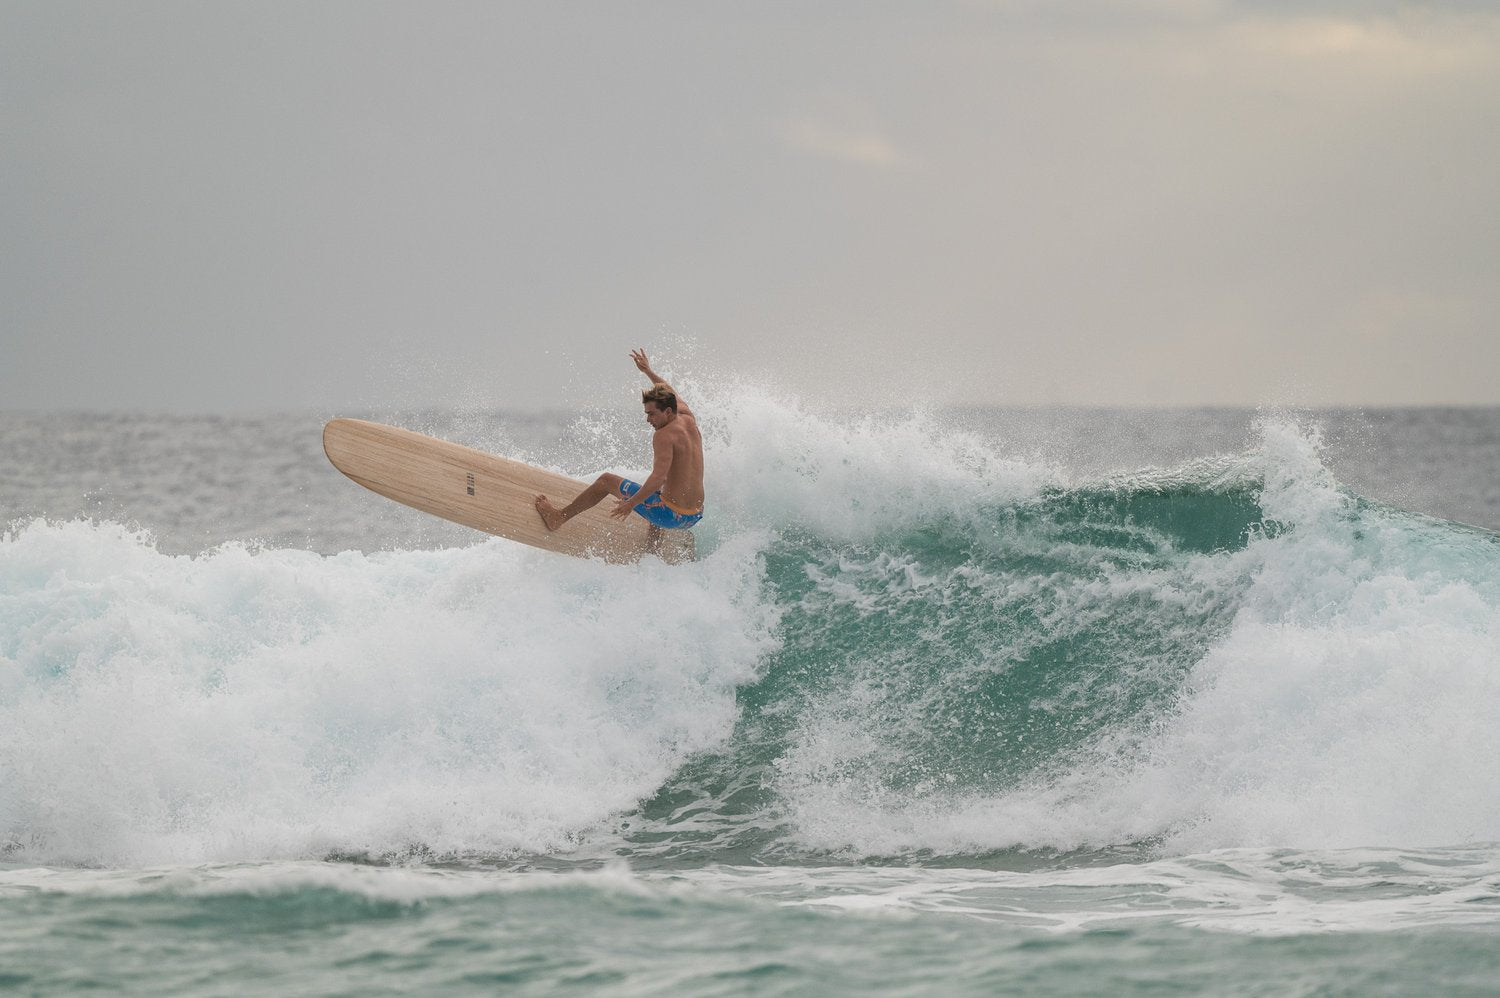 Declan Wyton surfing an environmentally friendly Sine Surf hollow wooden surfboard